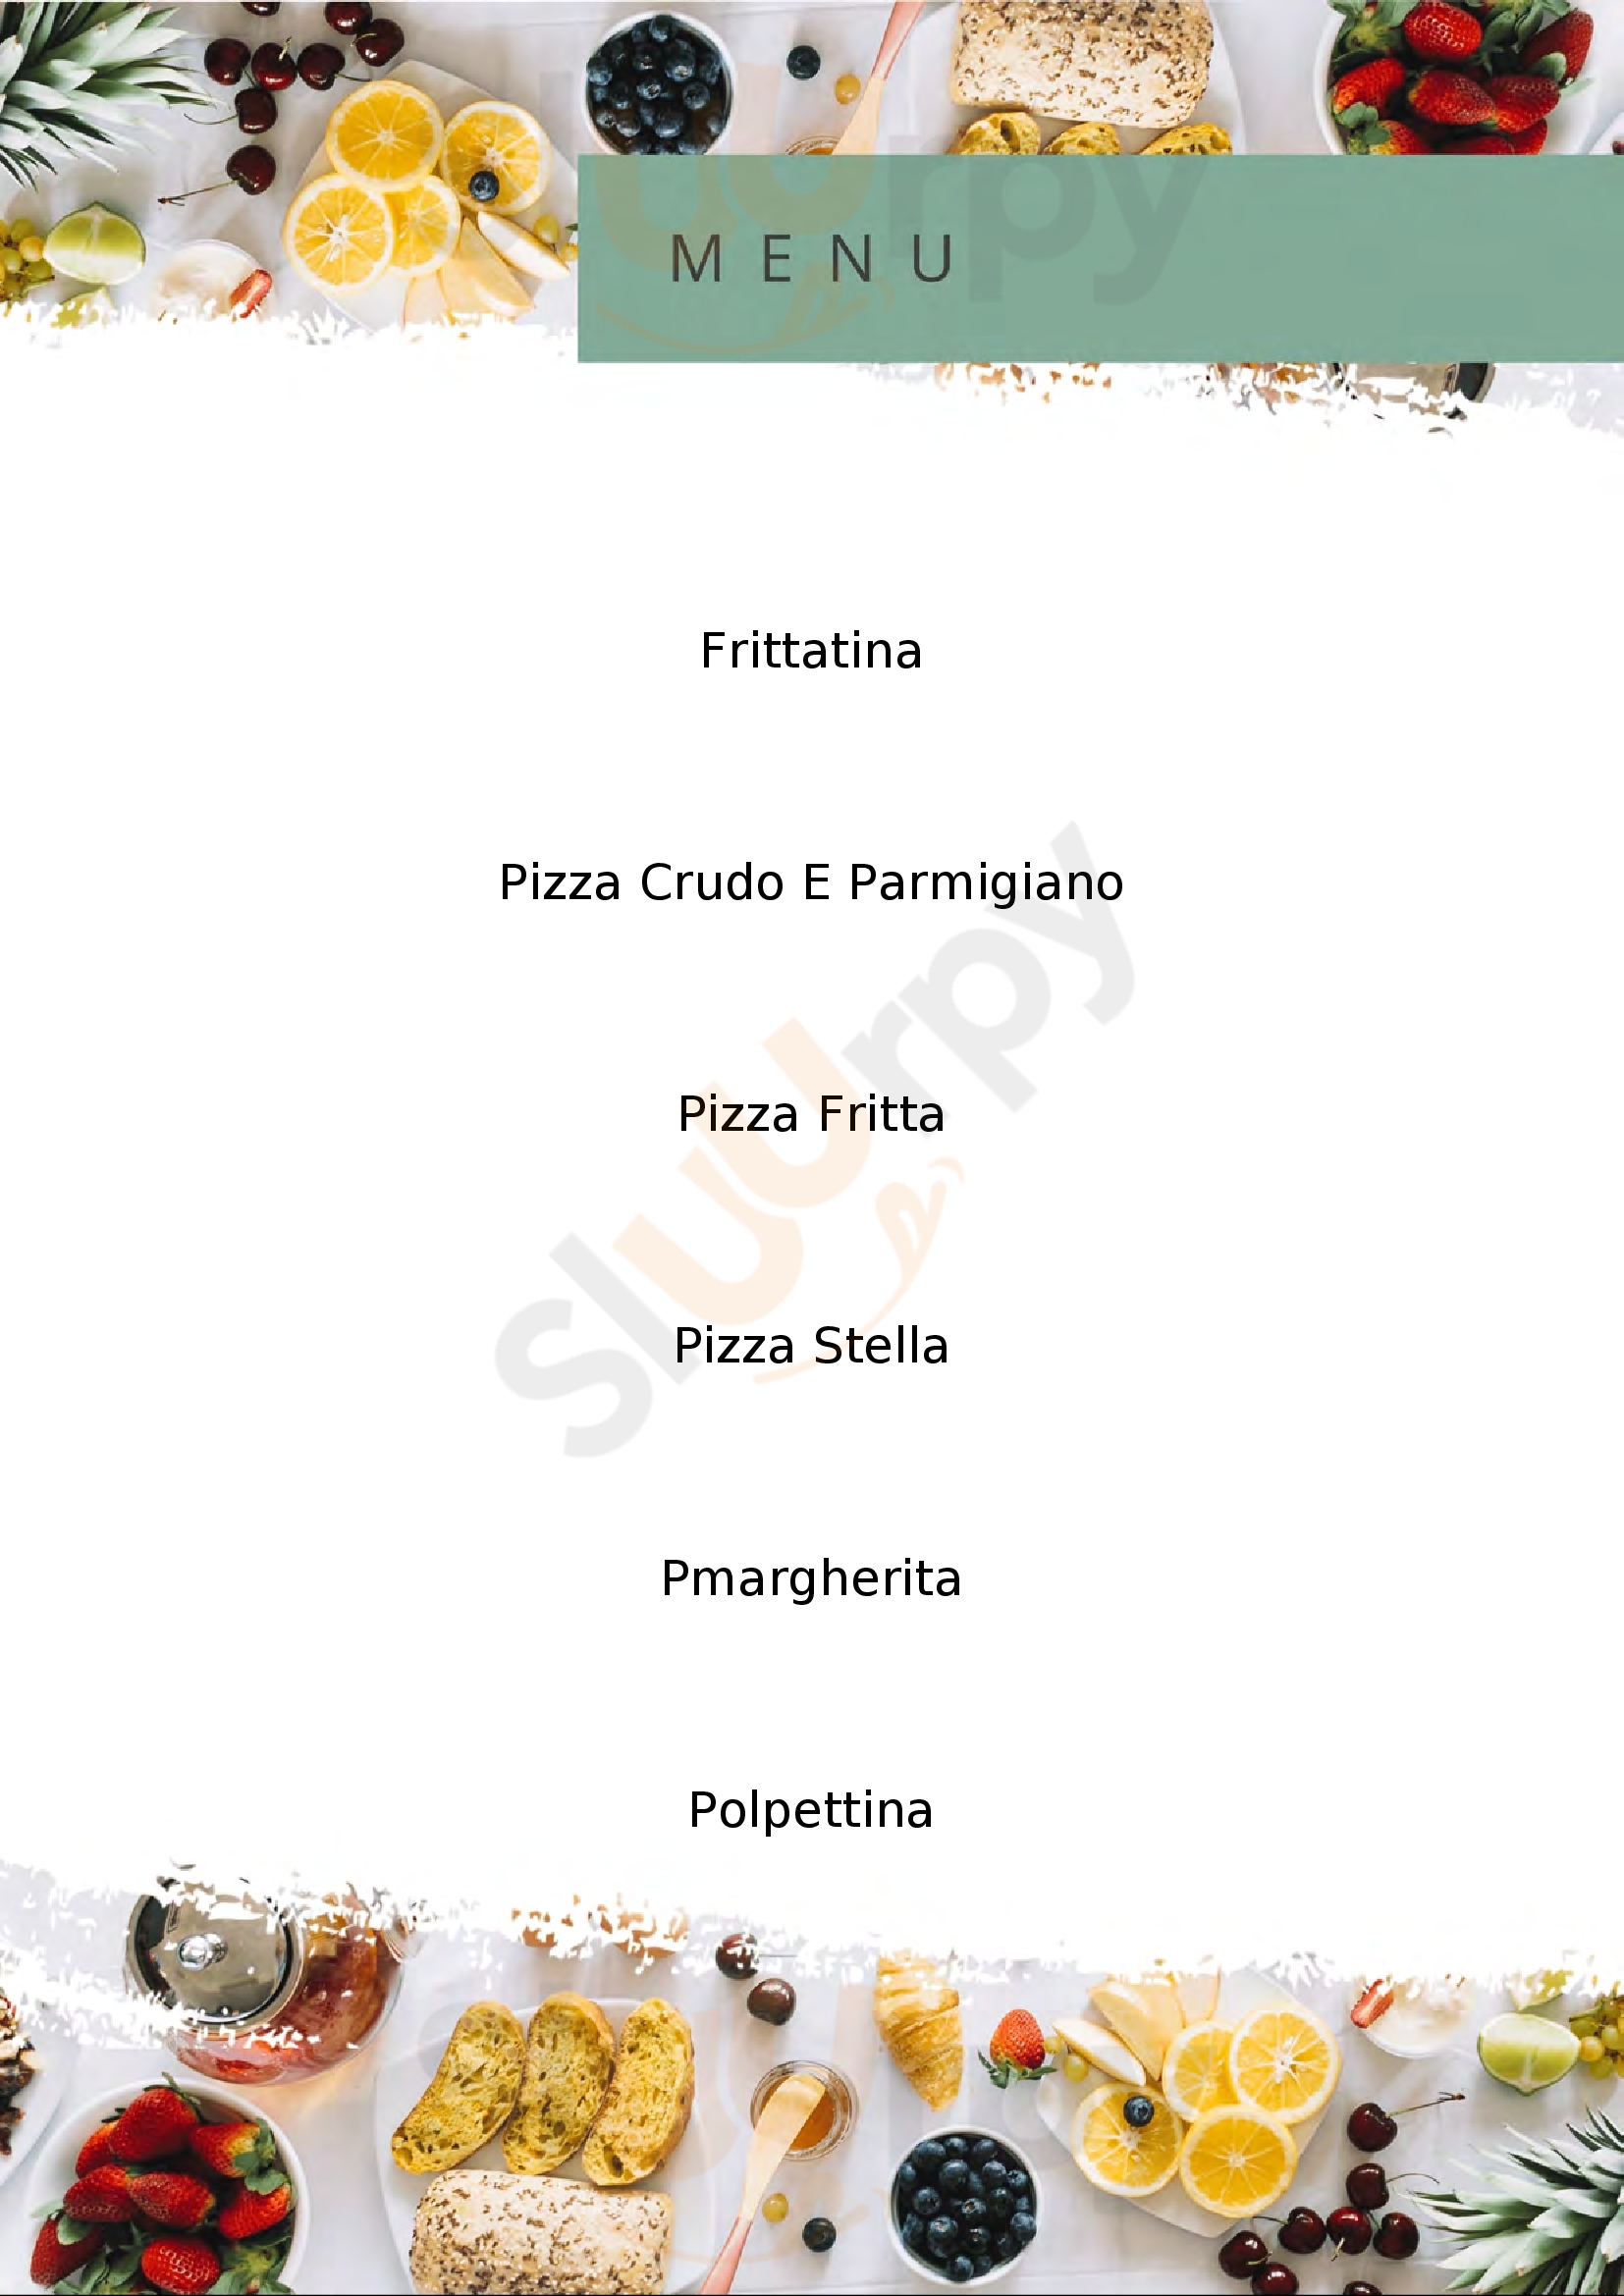 Pizzeria L'Angolo San Giorgio a Cremano menù 1 pagina